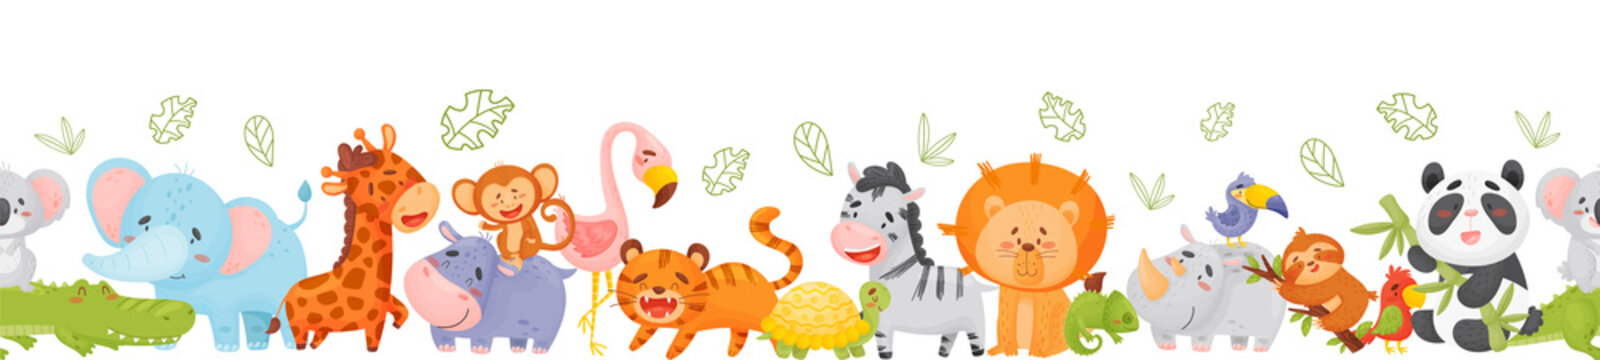 Seamless border with animals: koala, crocodile, elephant, giraffe, hippo, monkey, flamingo, tiger, turtle, zebra, lion, chameleon, rhino, toucan, sloth, parrot, panda. Vector, isolated background 